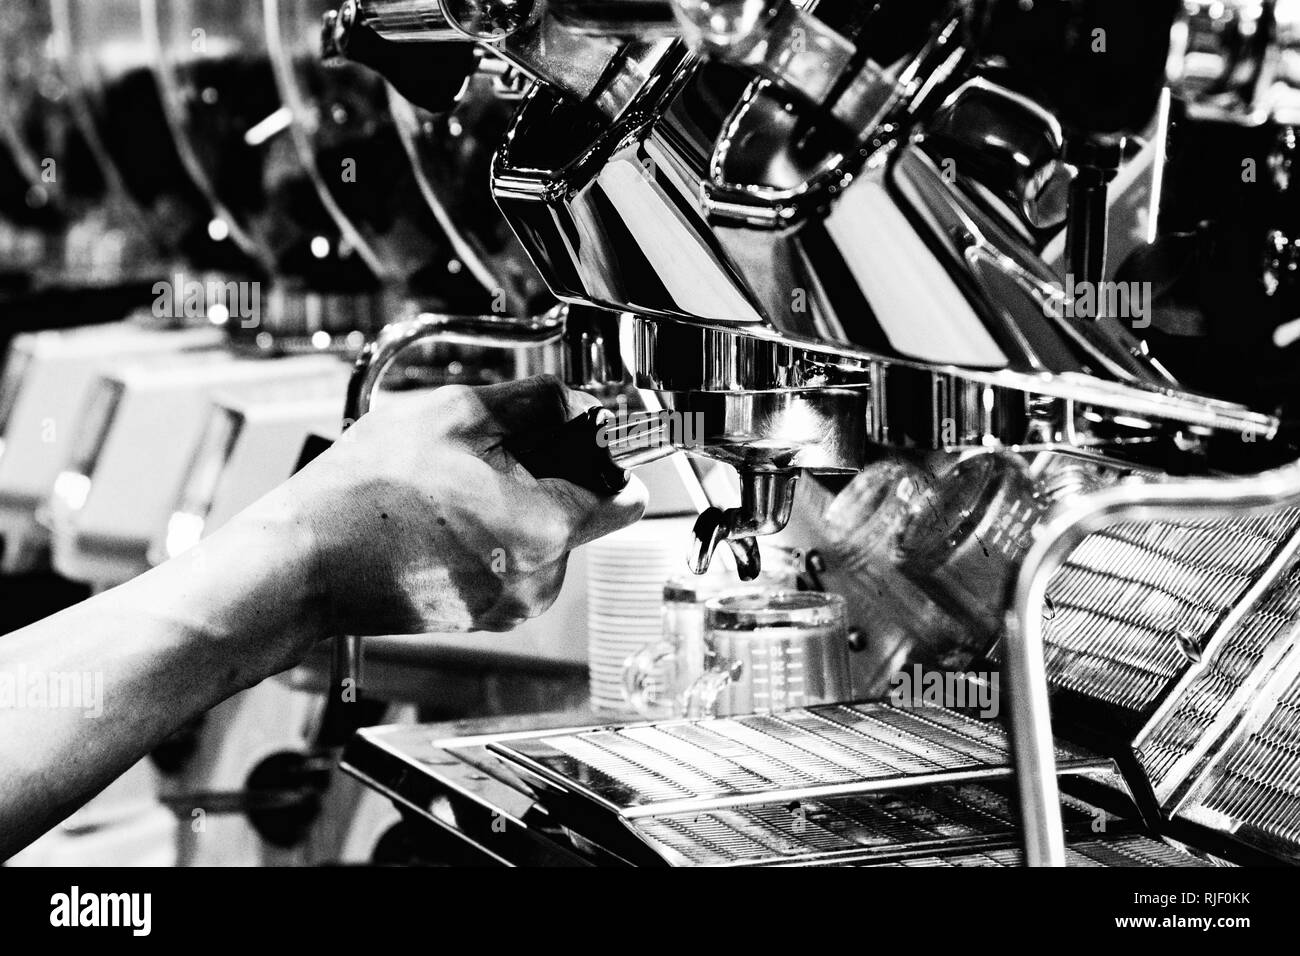 Espresso shot from coffee machine in coffee shop,Coffee maker in coffee shop Stock Photo